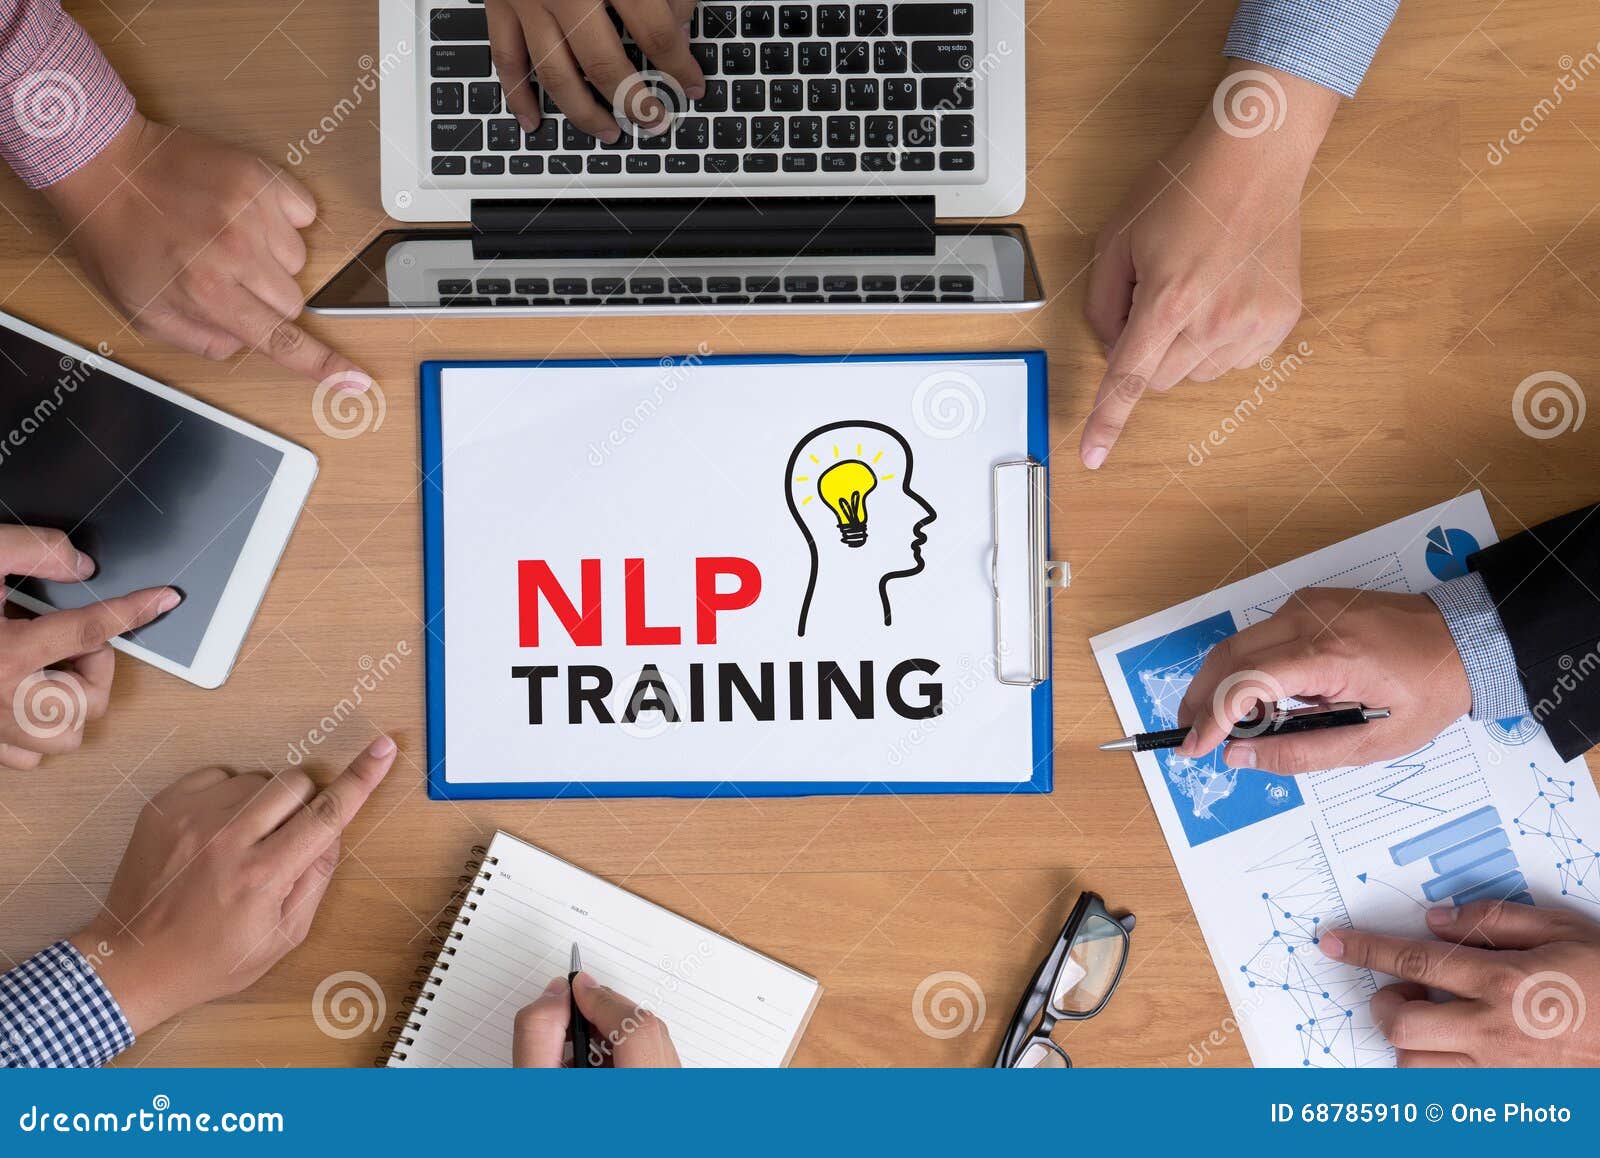 nlp training concept